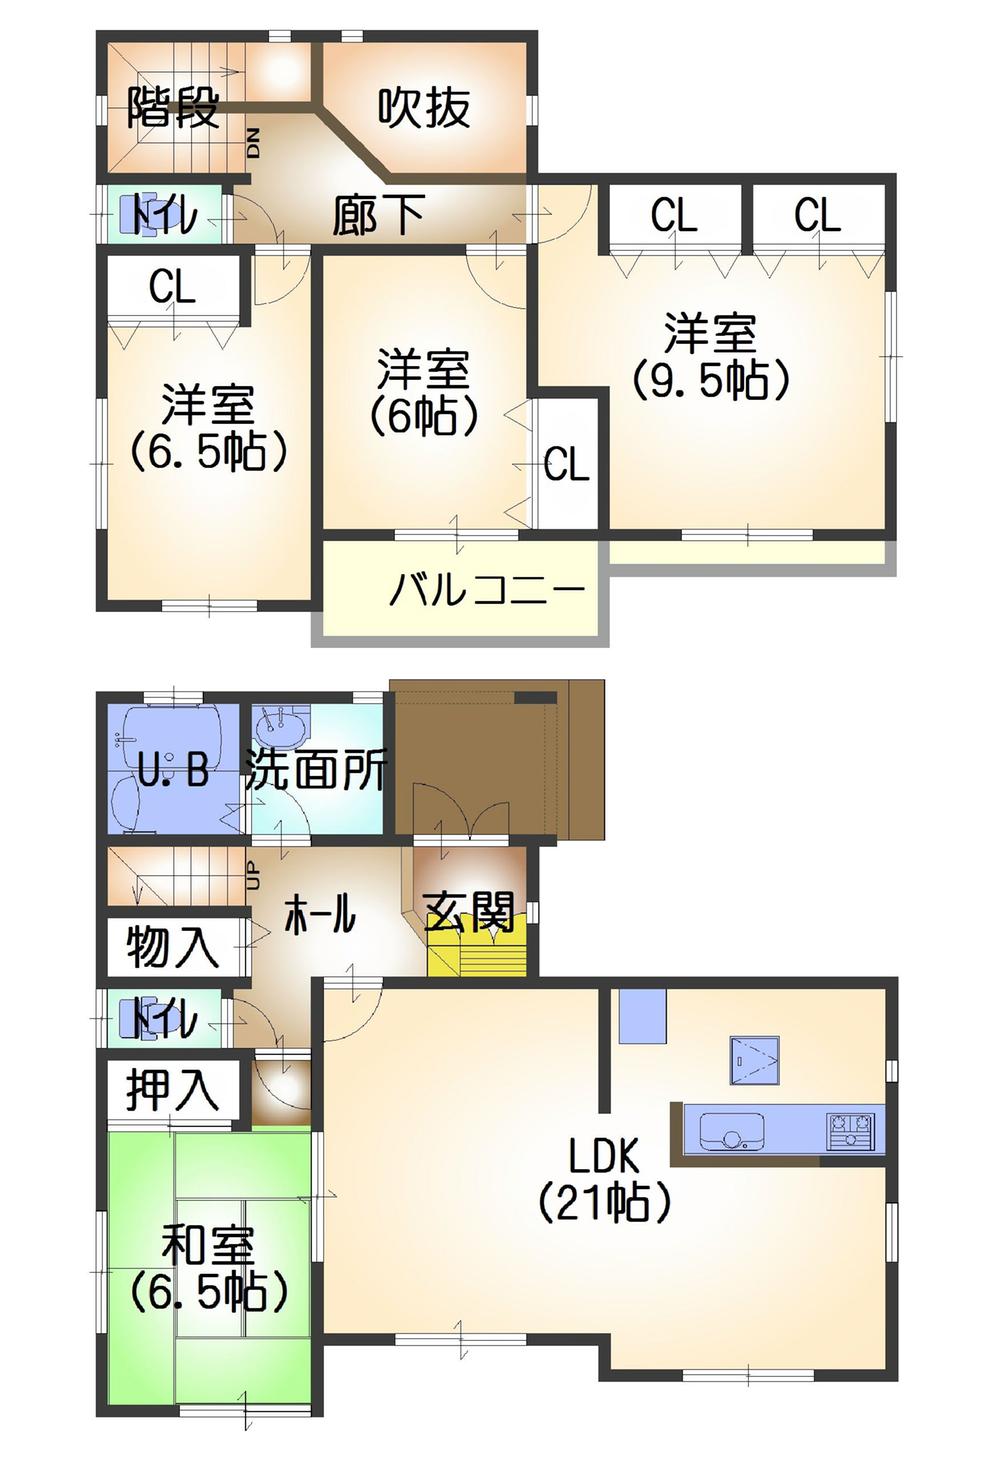 Floor plan. 24,800,000 yen, 4LDK, Land area 207.68 sq m , Building area 118.82 sq m